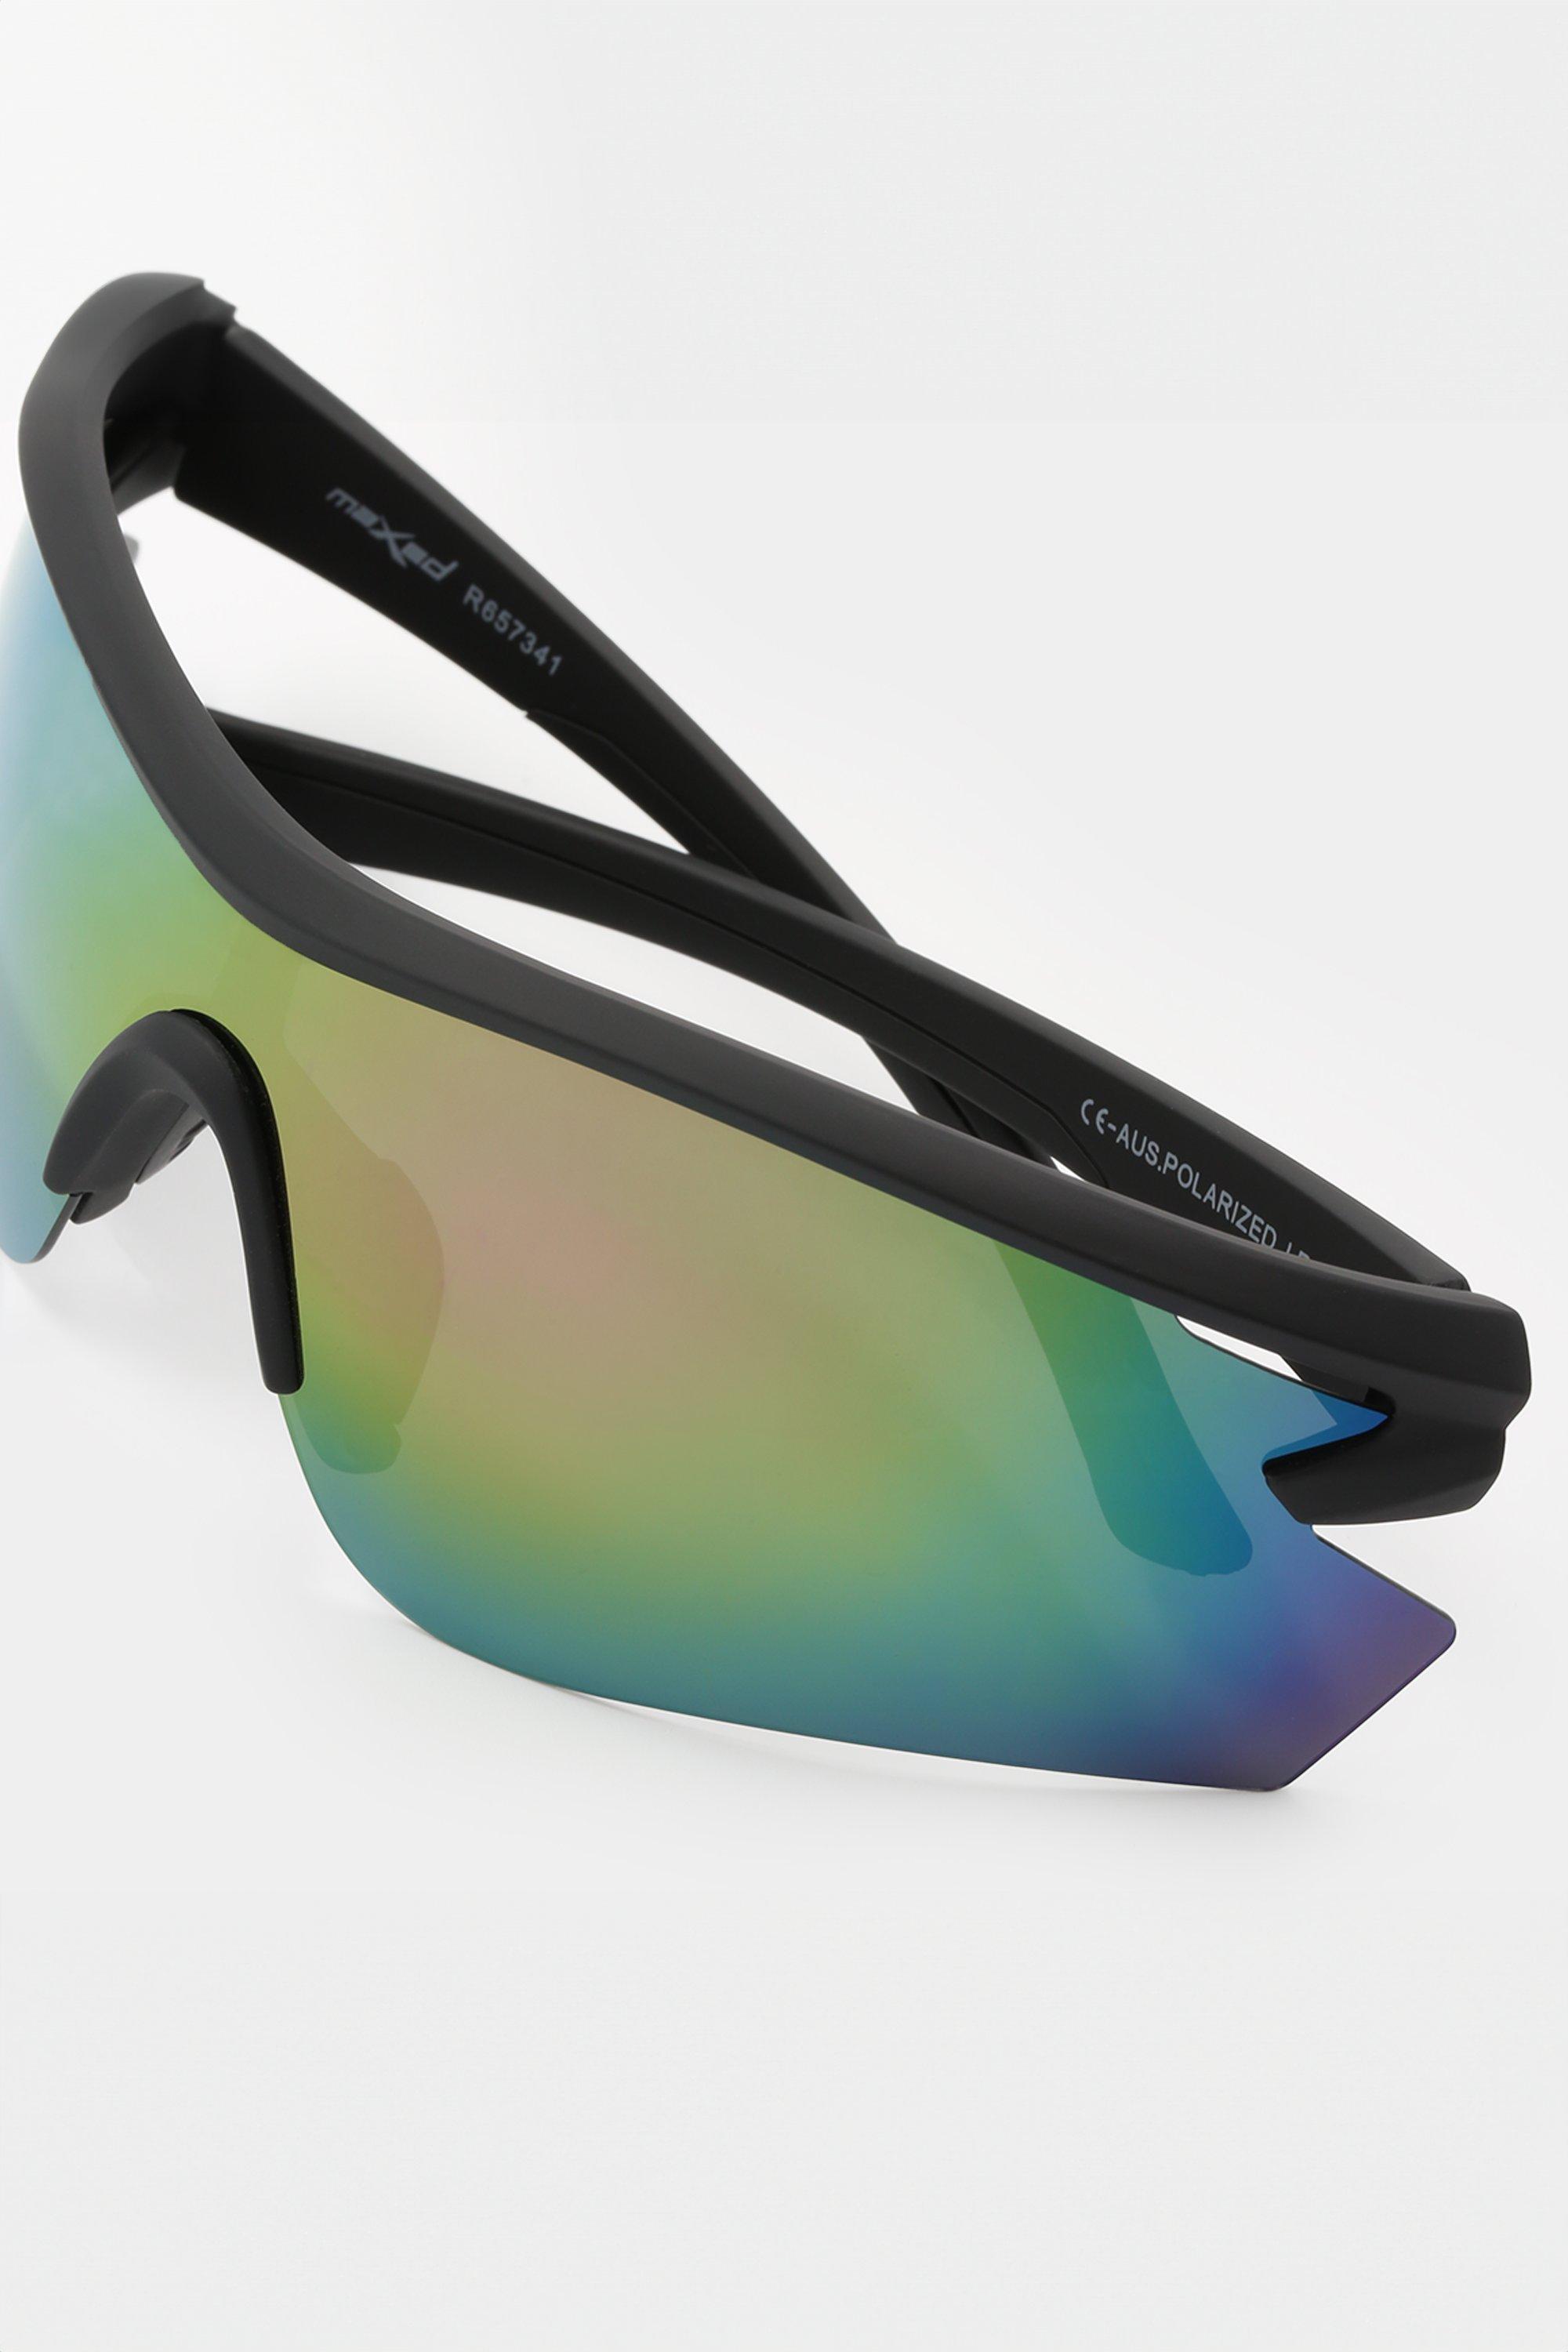 POLASUP Polarized Sport Sunglasses for Men Women Algeria